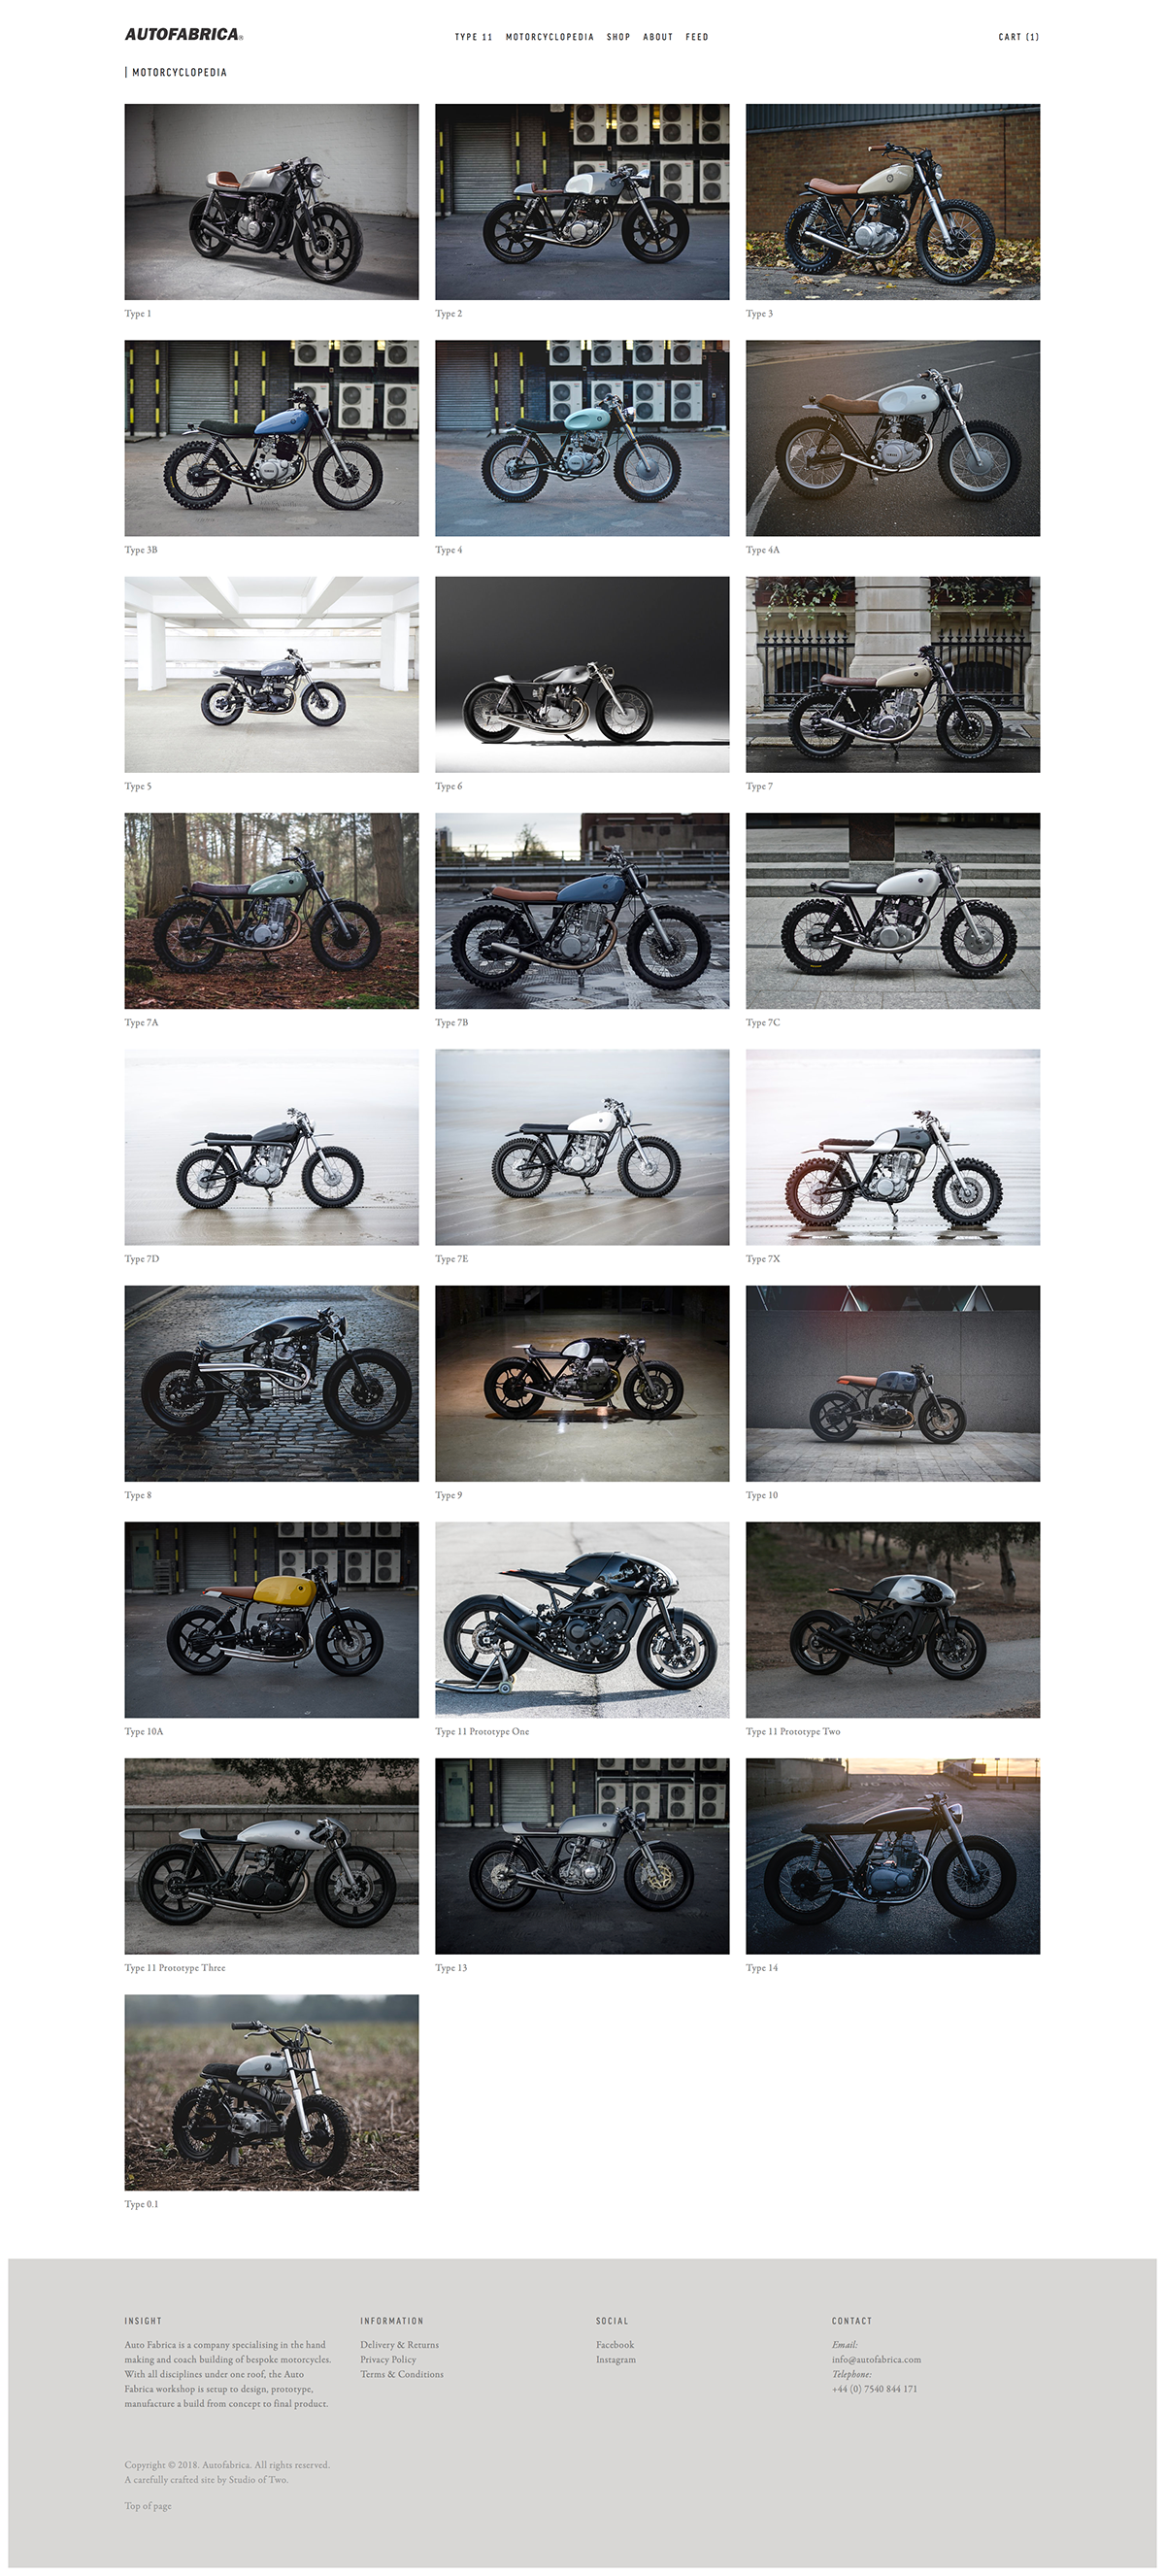 Auto Fabrica Custom Motorcycle squarespace Website design grid The Printer's Son